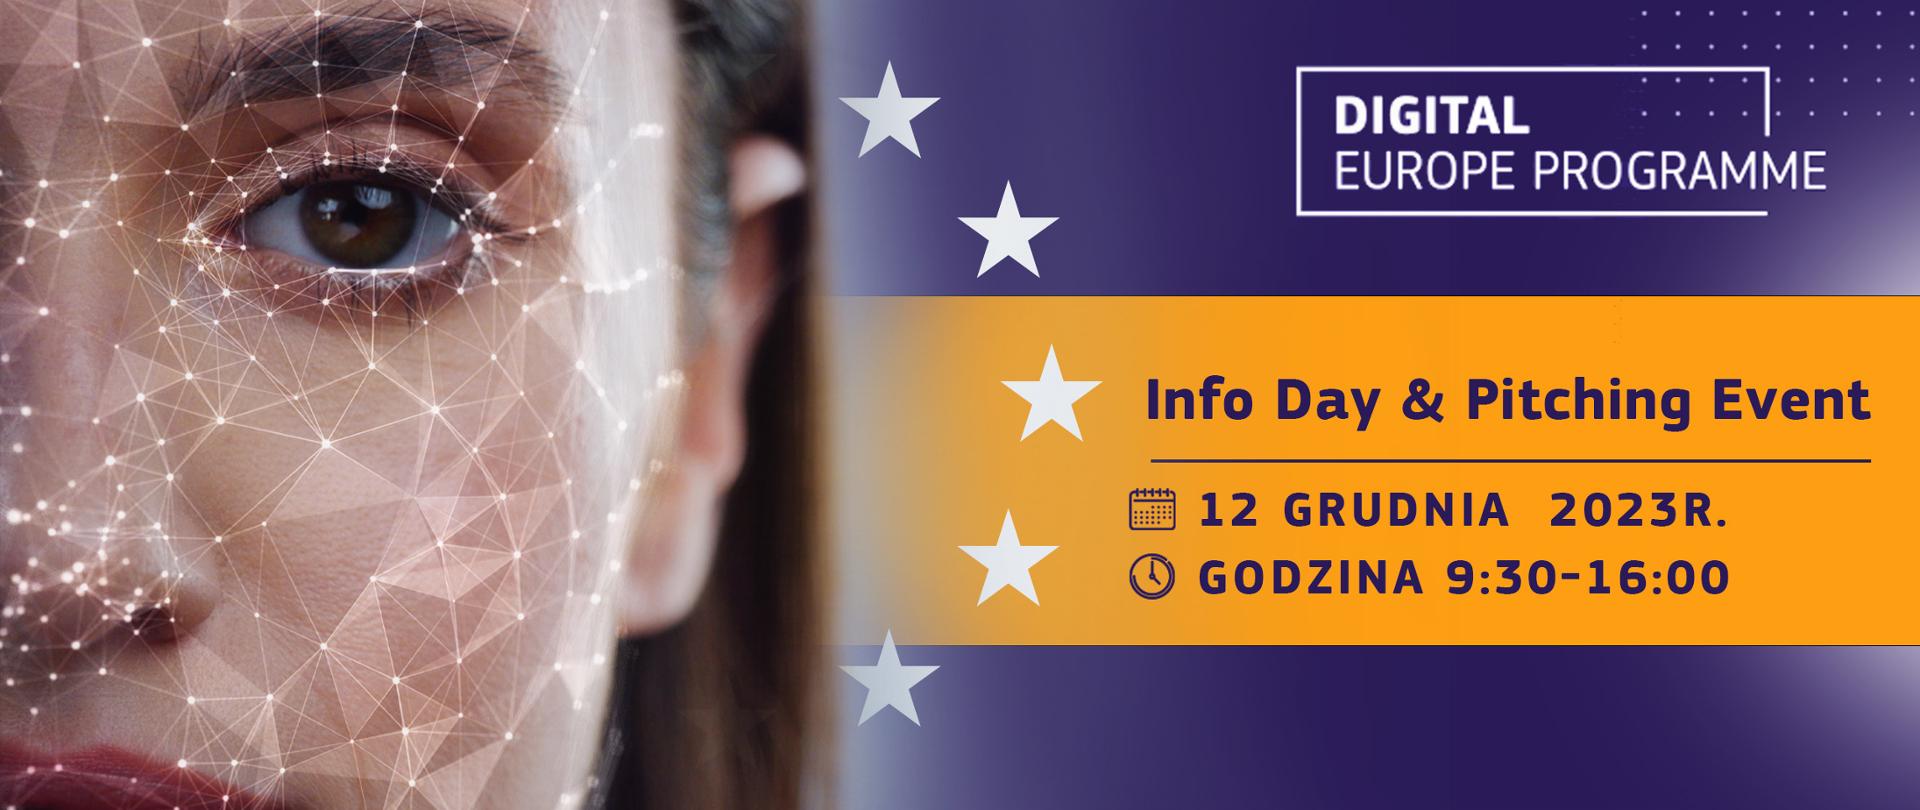 Digital Europe Programm